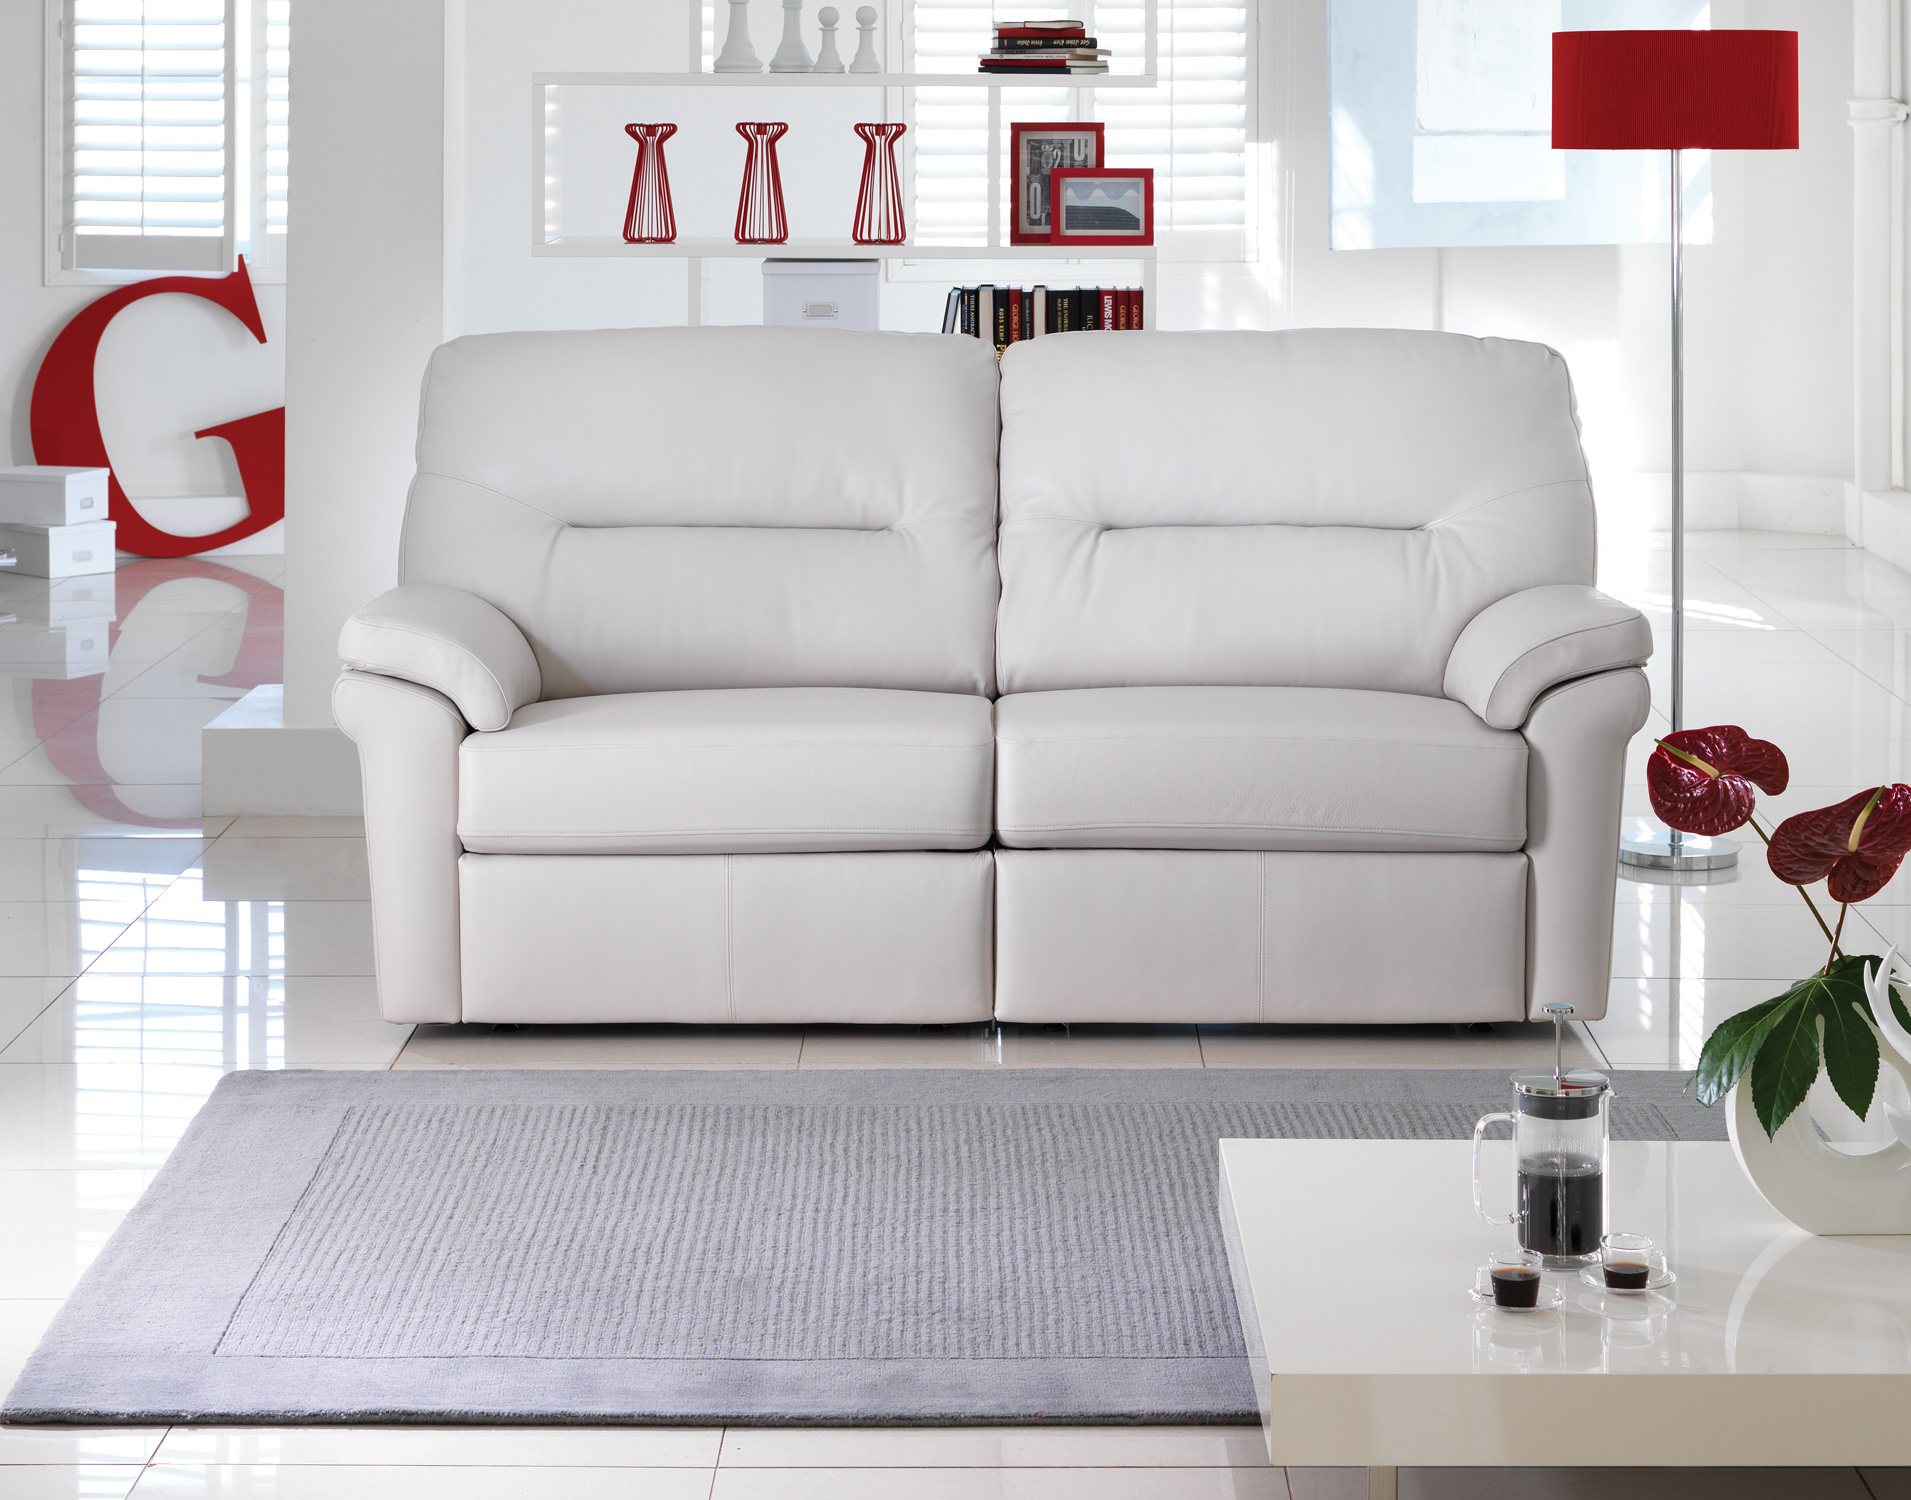 g plan washington leather recliner sofa